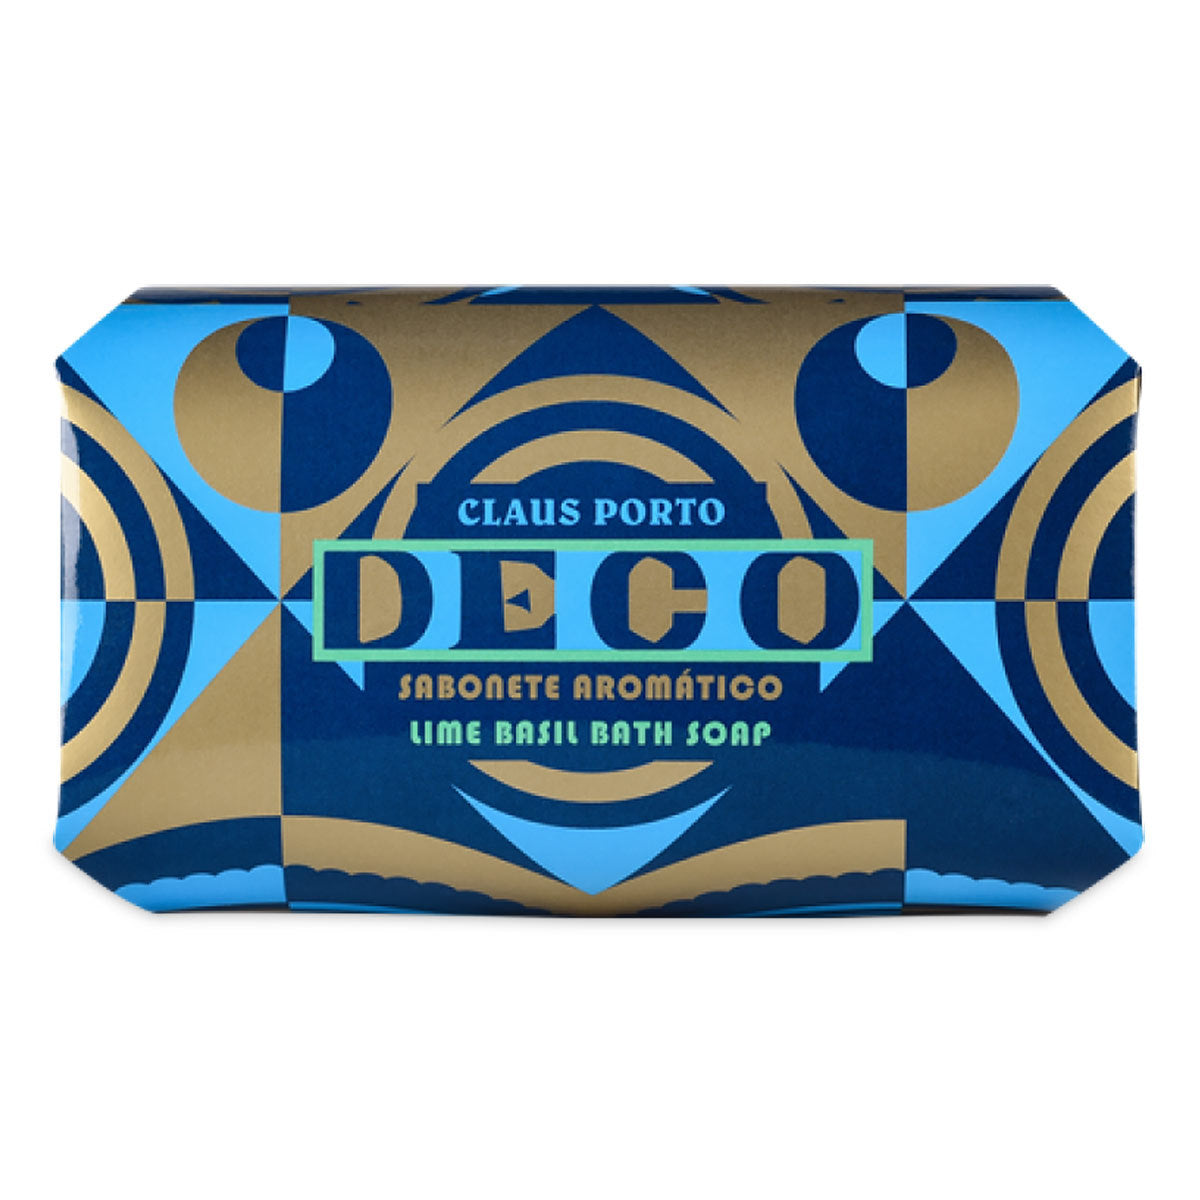 Primary image of Deco Hand Soap